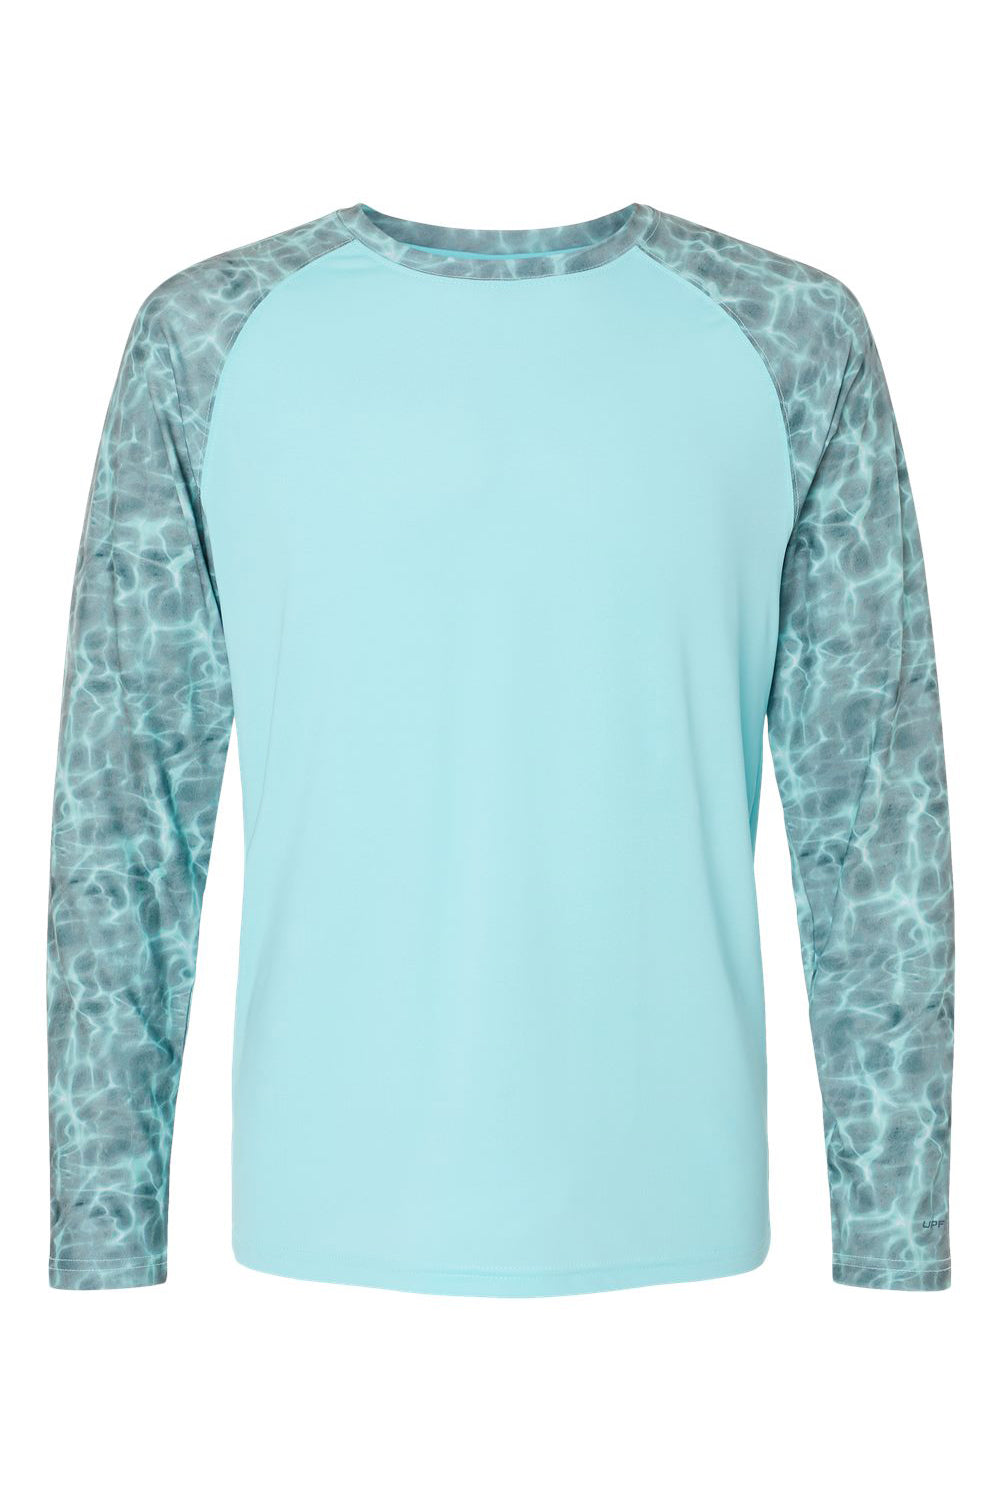 Paragon 231 Mens Panama Colorblocked Long Sleeve Crewneck T-Shirt Grey Aqua Water Flat Front